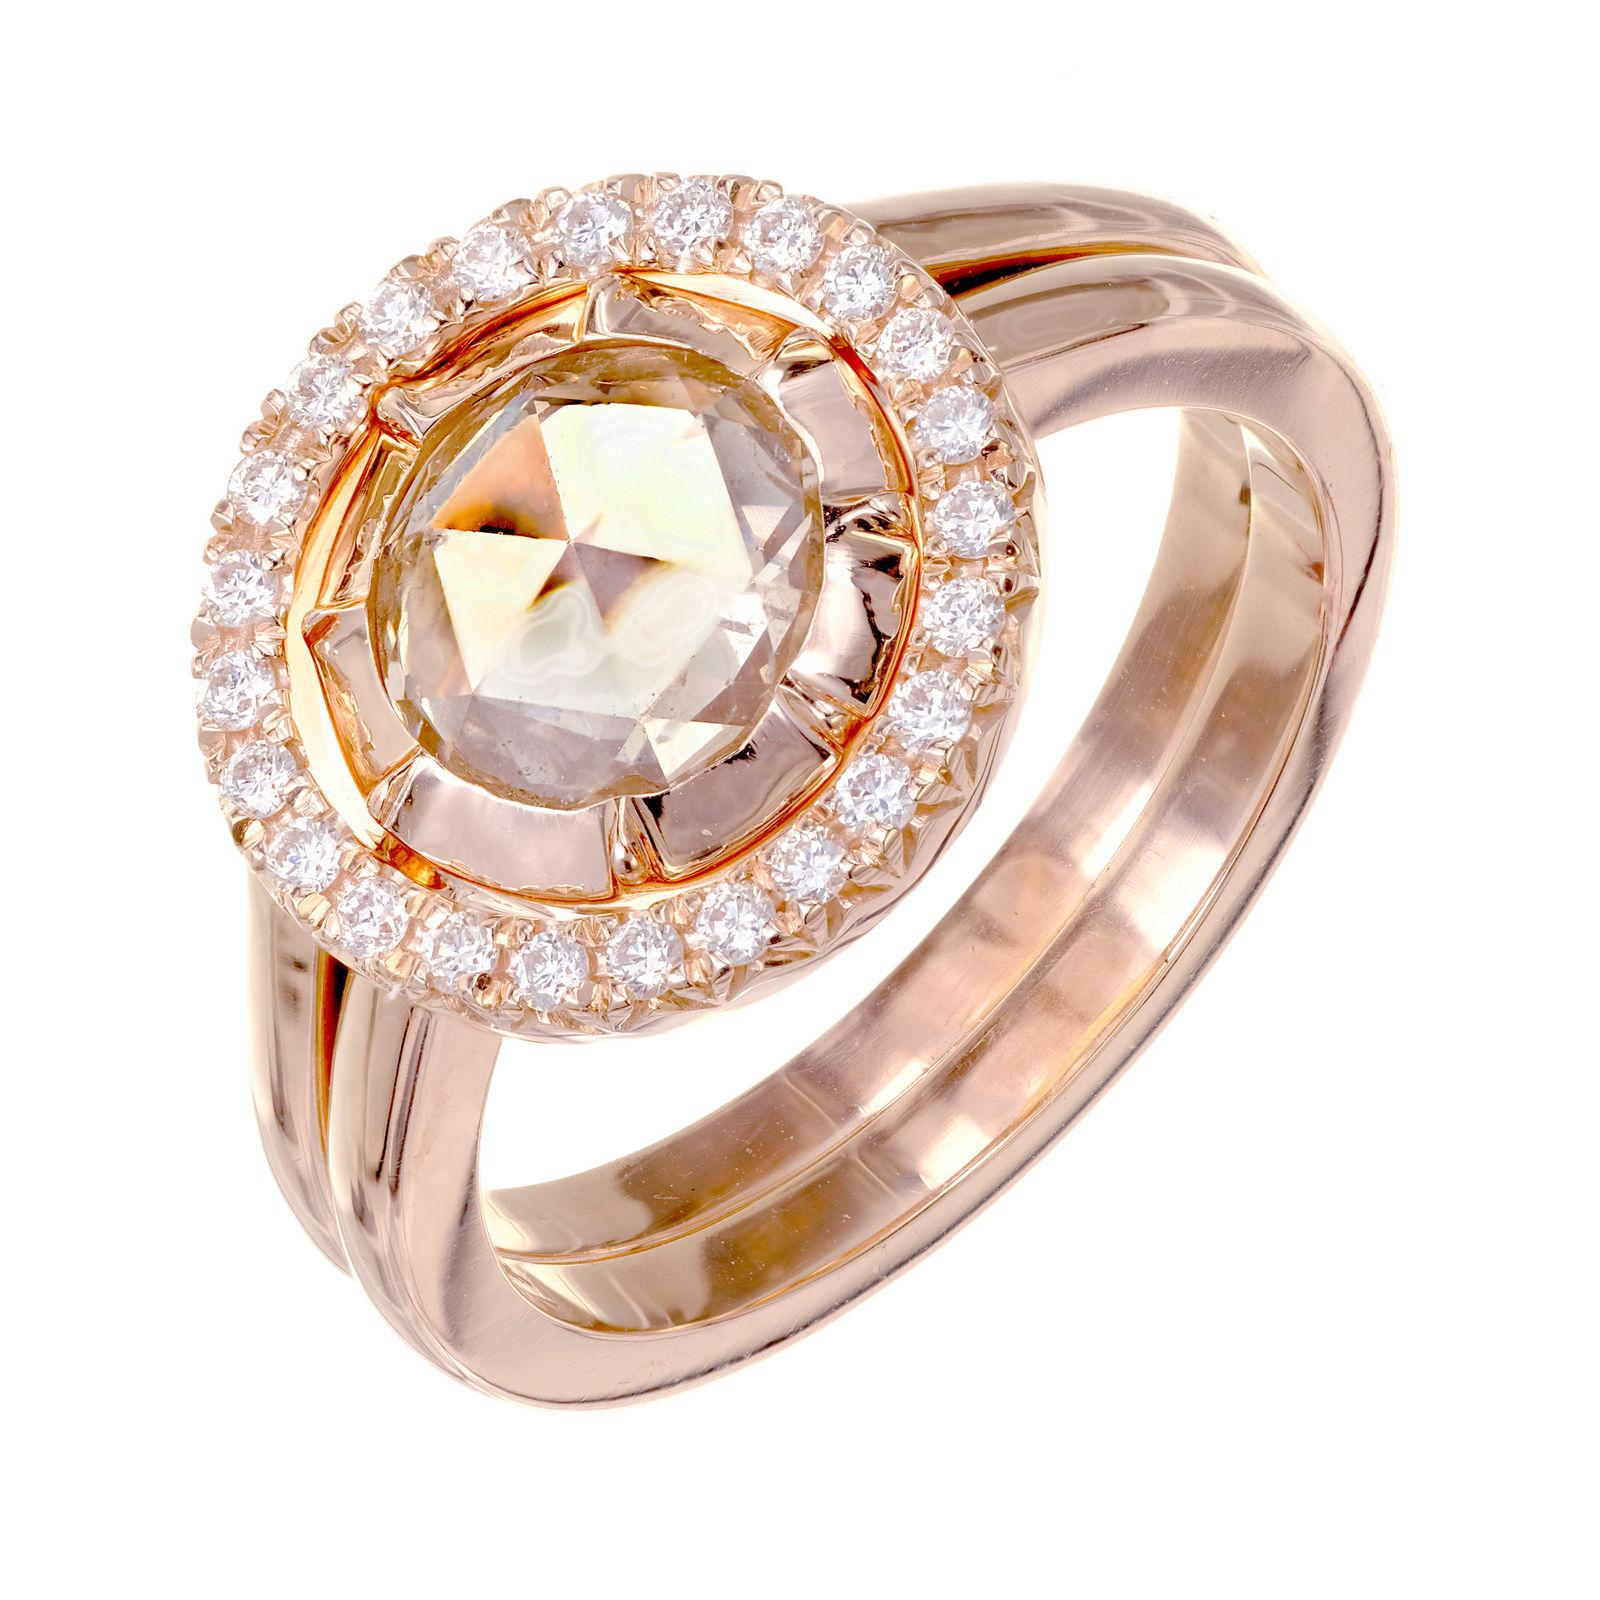 Peter Suchy GIA Certified 1.14 Carat Diamond Halo Rose Gold Engagement Ring